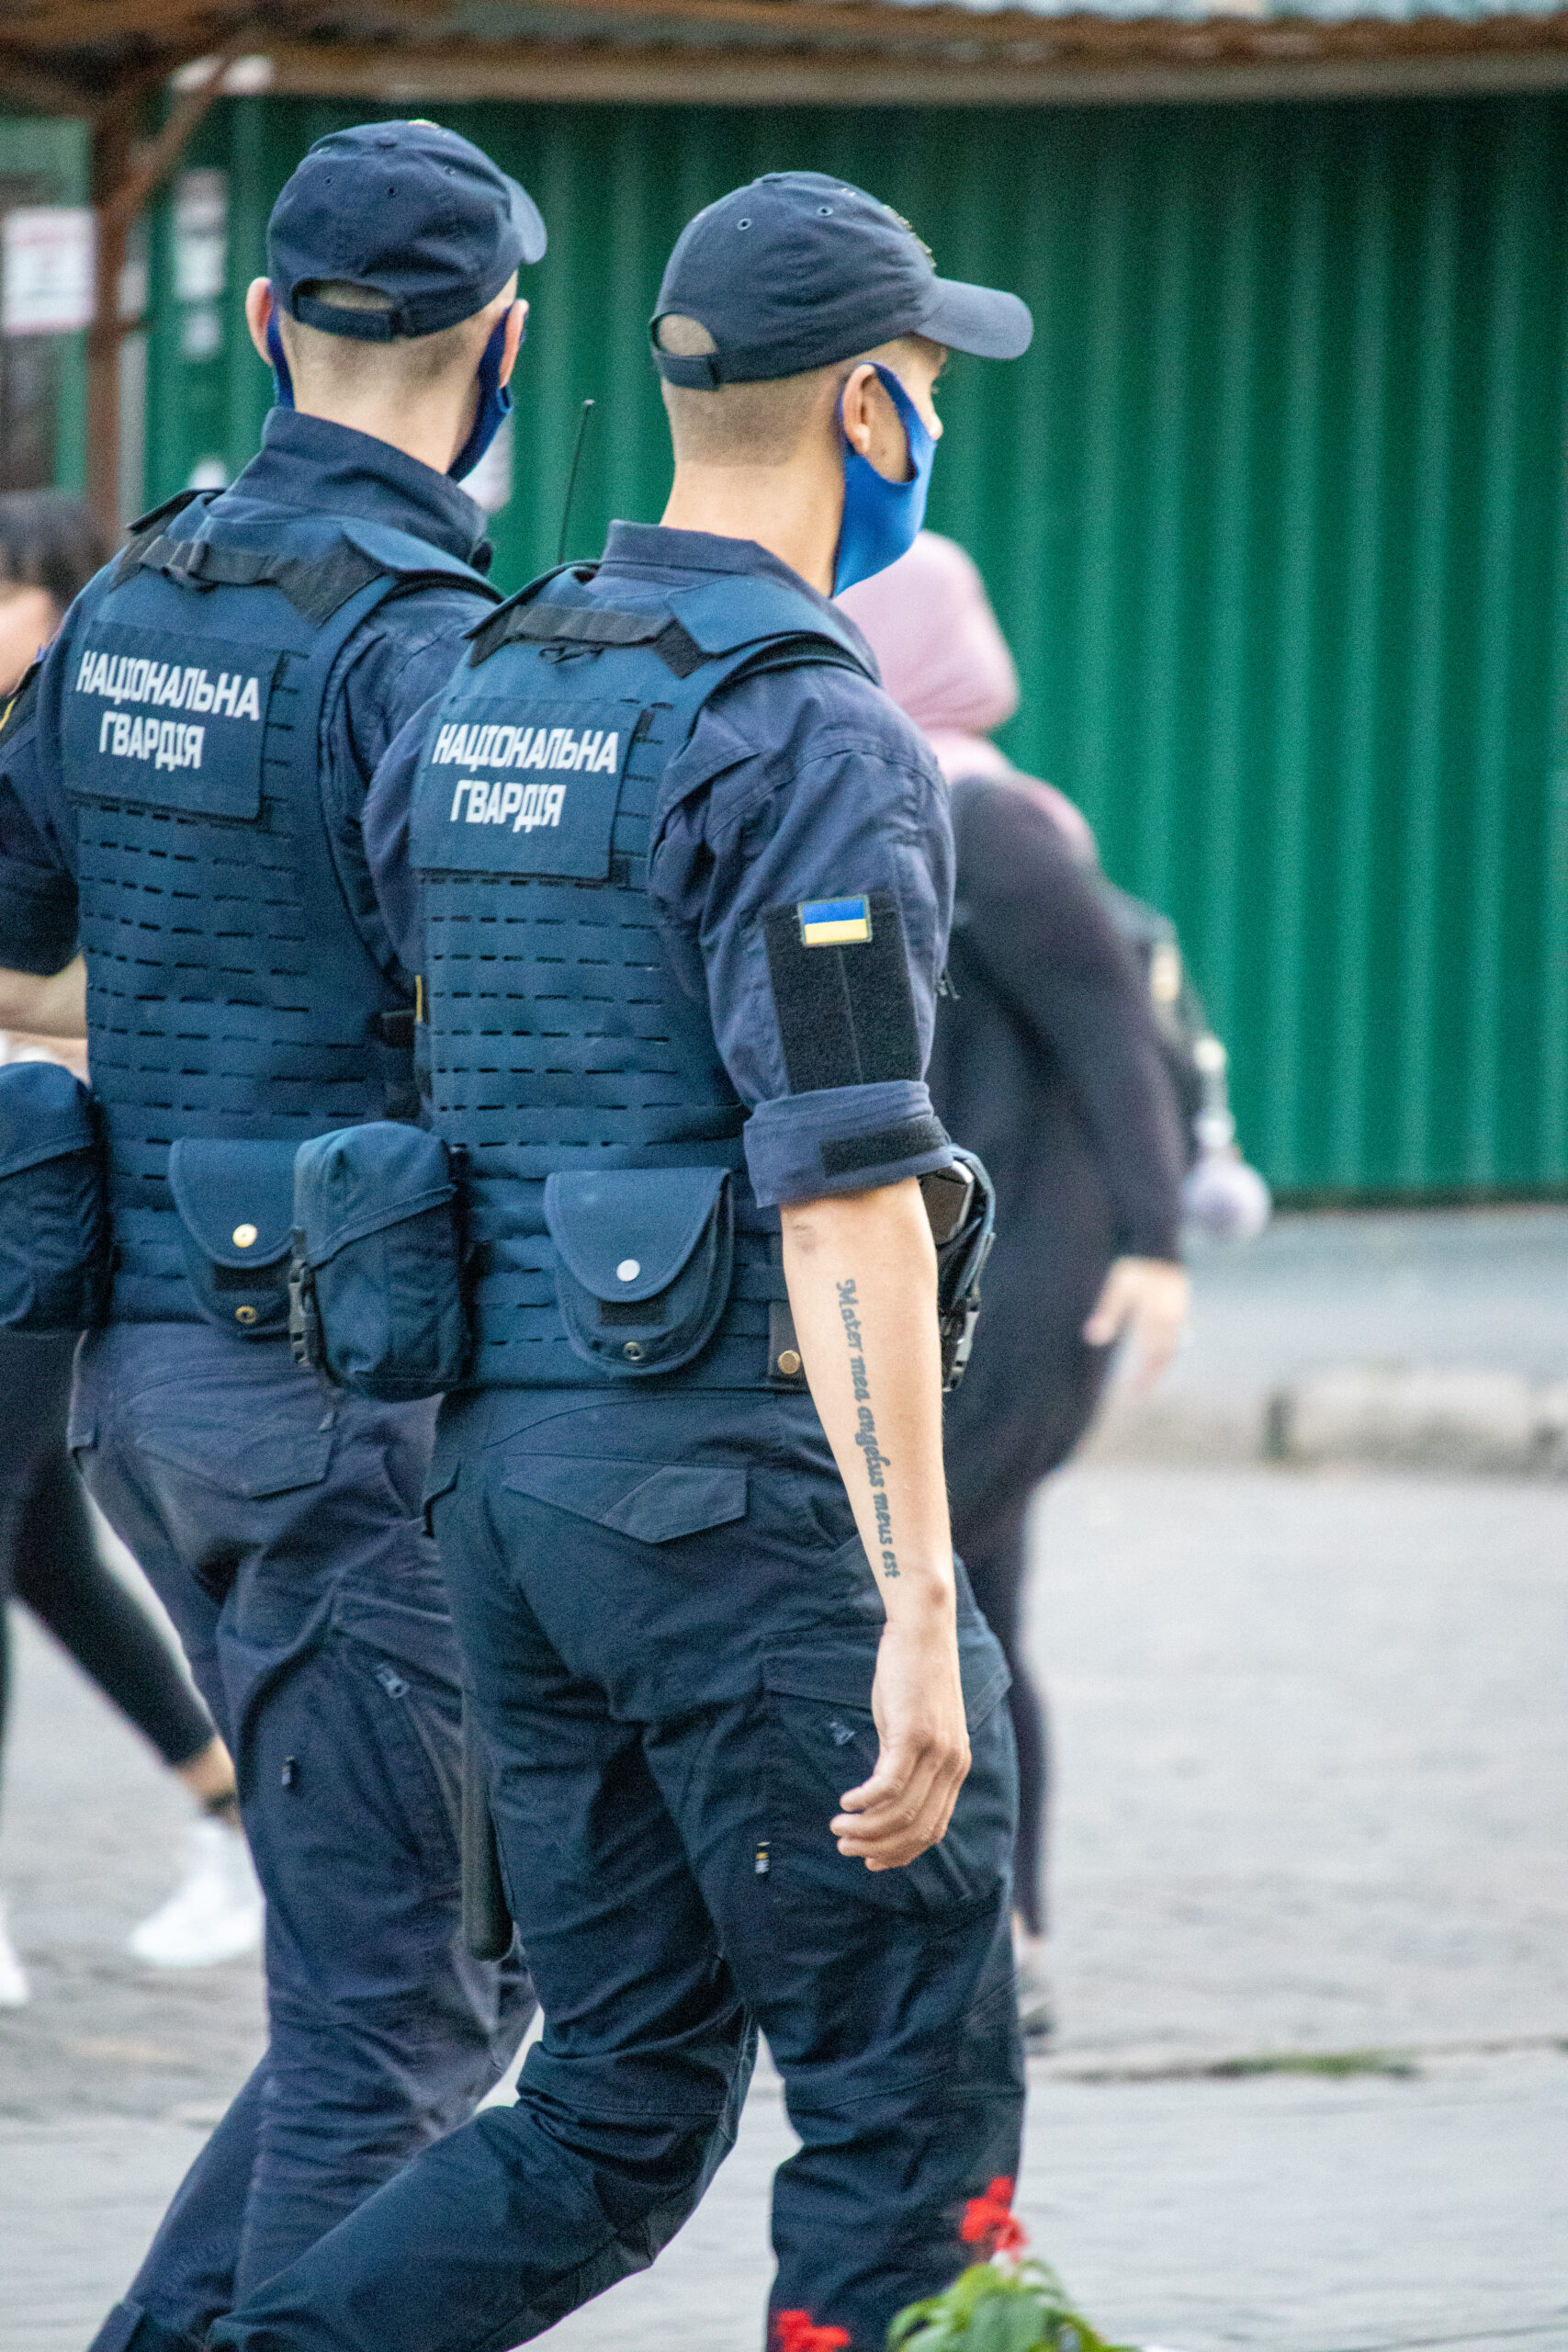 Ukrainian cop with a tattoo on his arm - Ukraine, Odessa, 27.09,2020